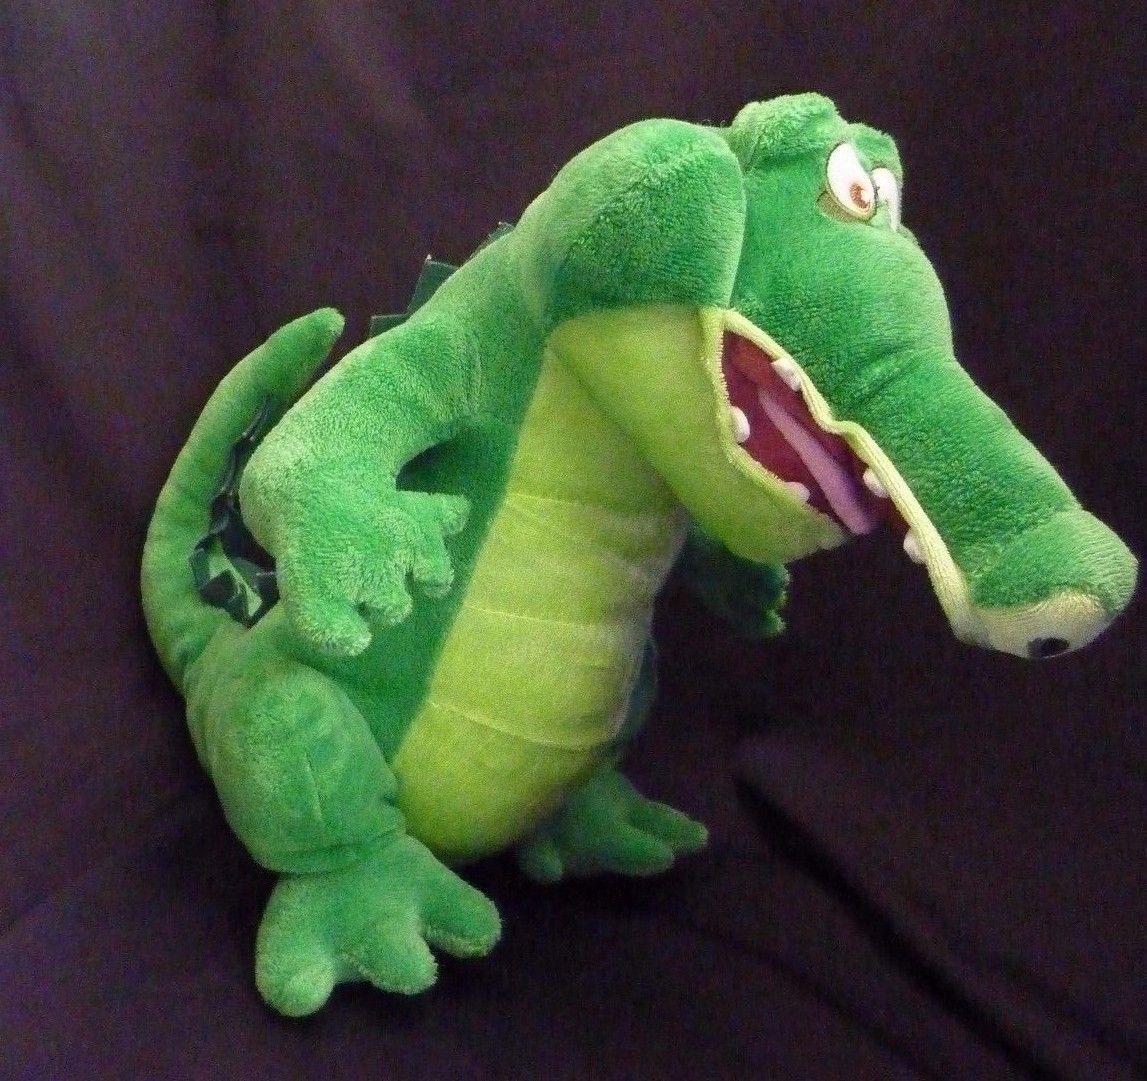 tick tock croc stuffed animal